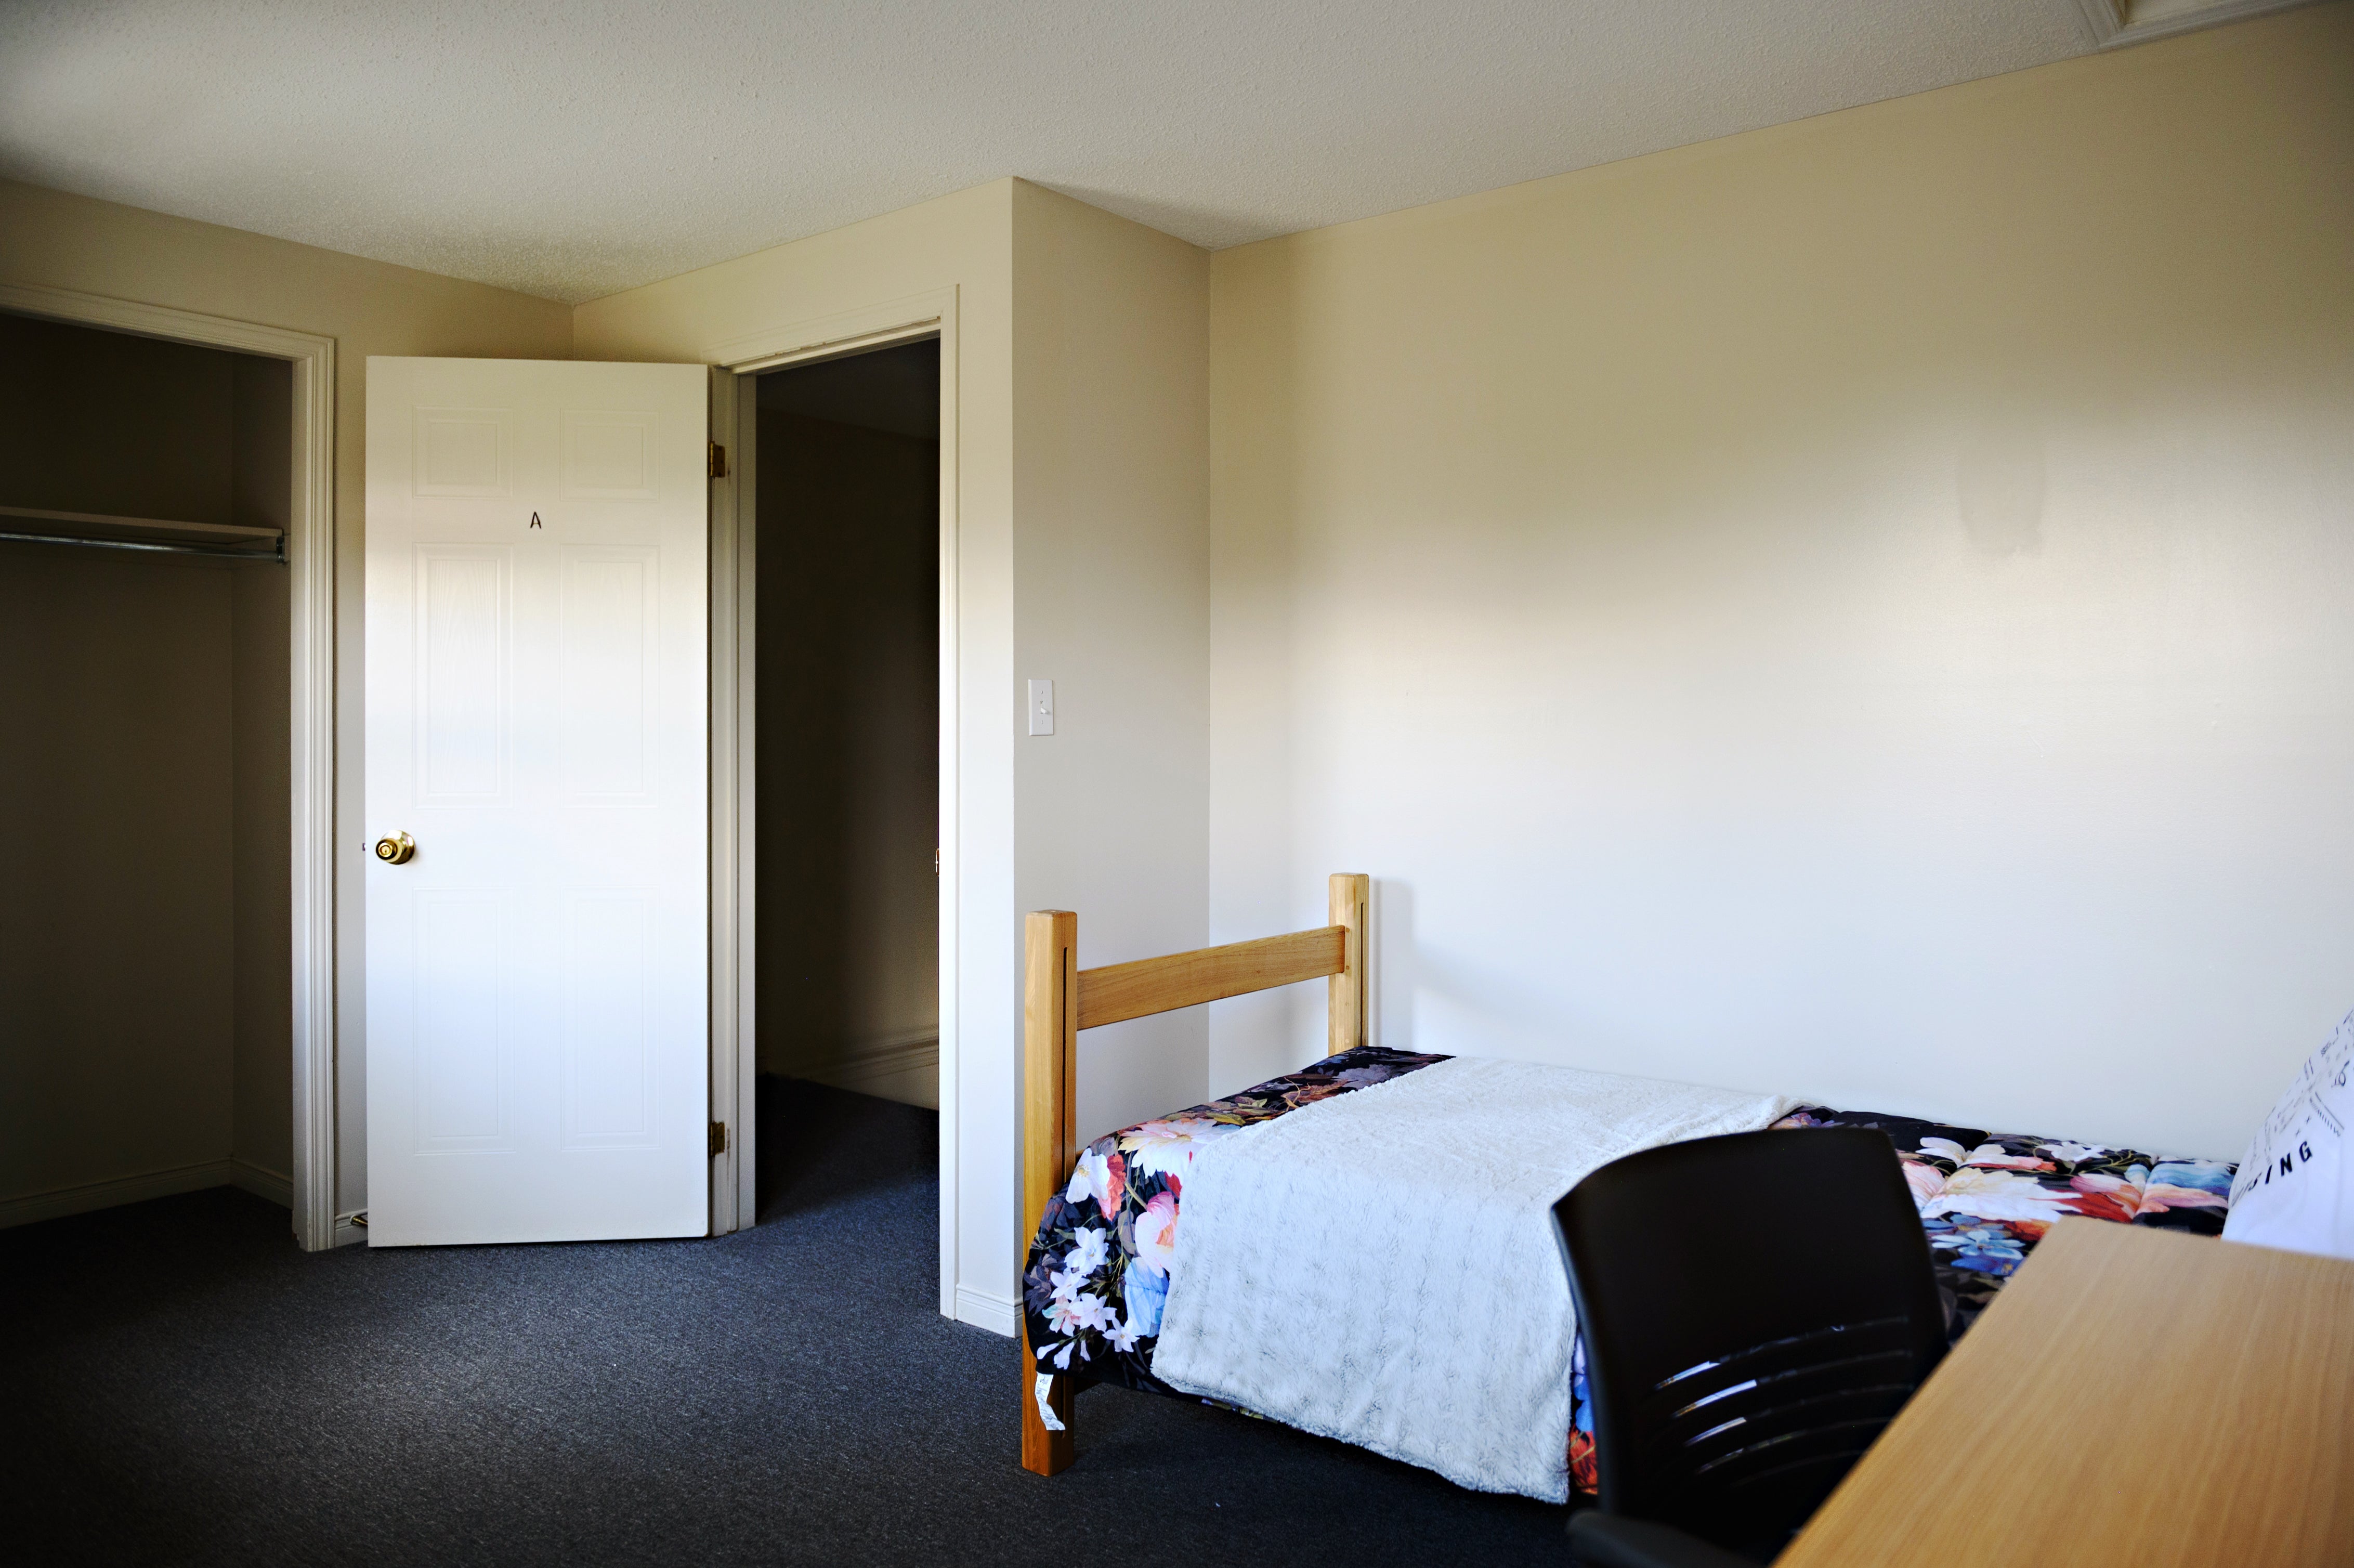 CLV-North furnished bedroom